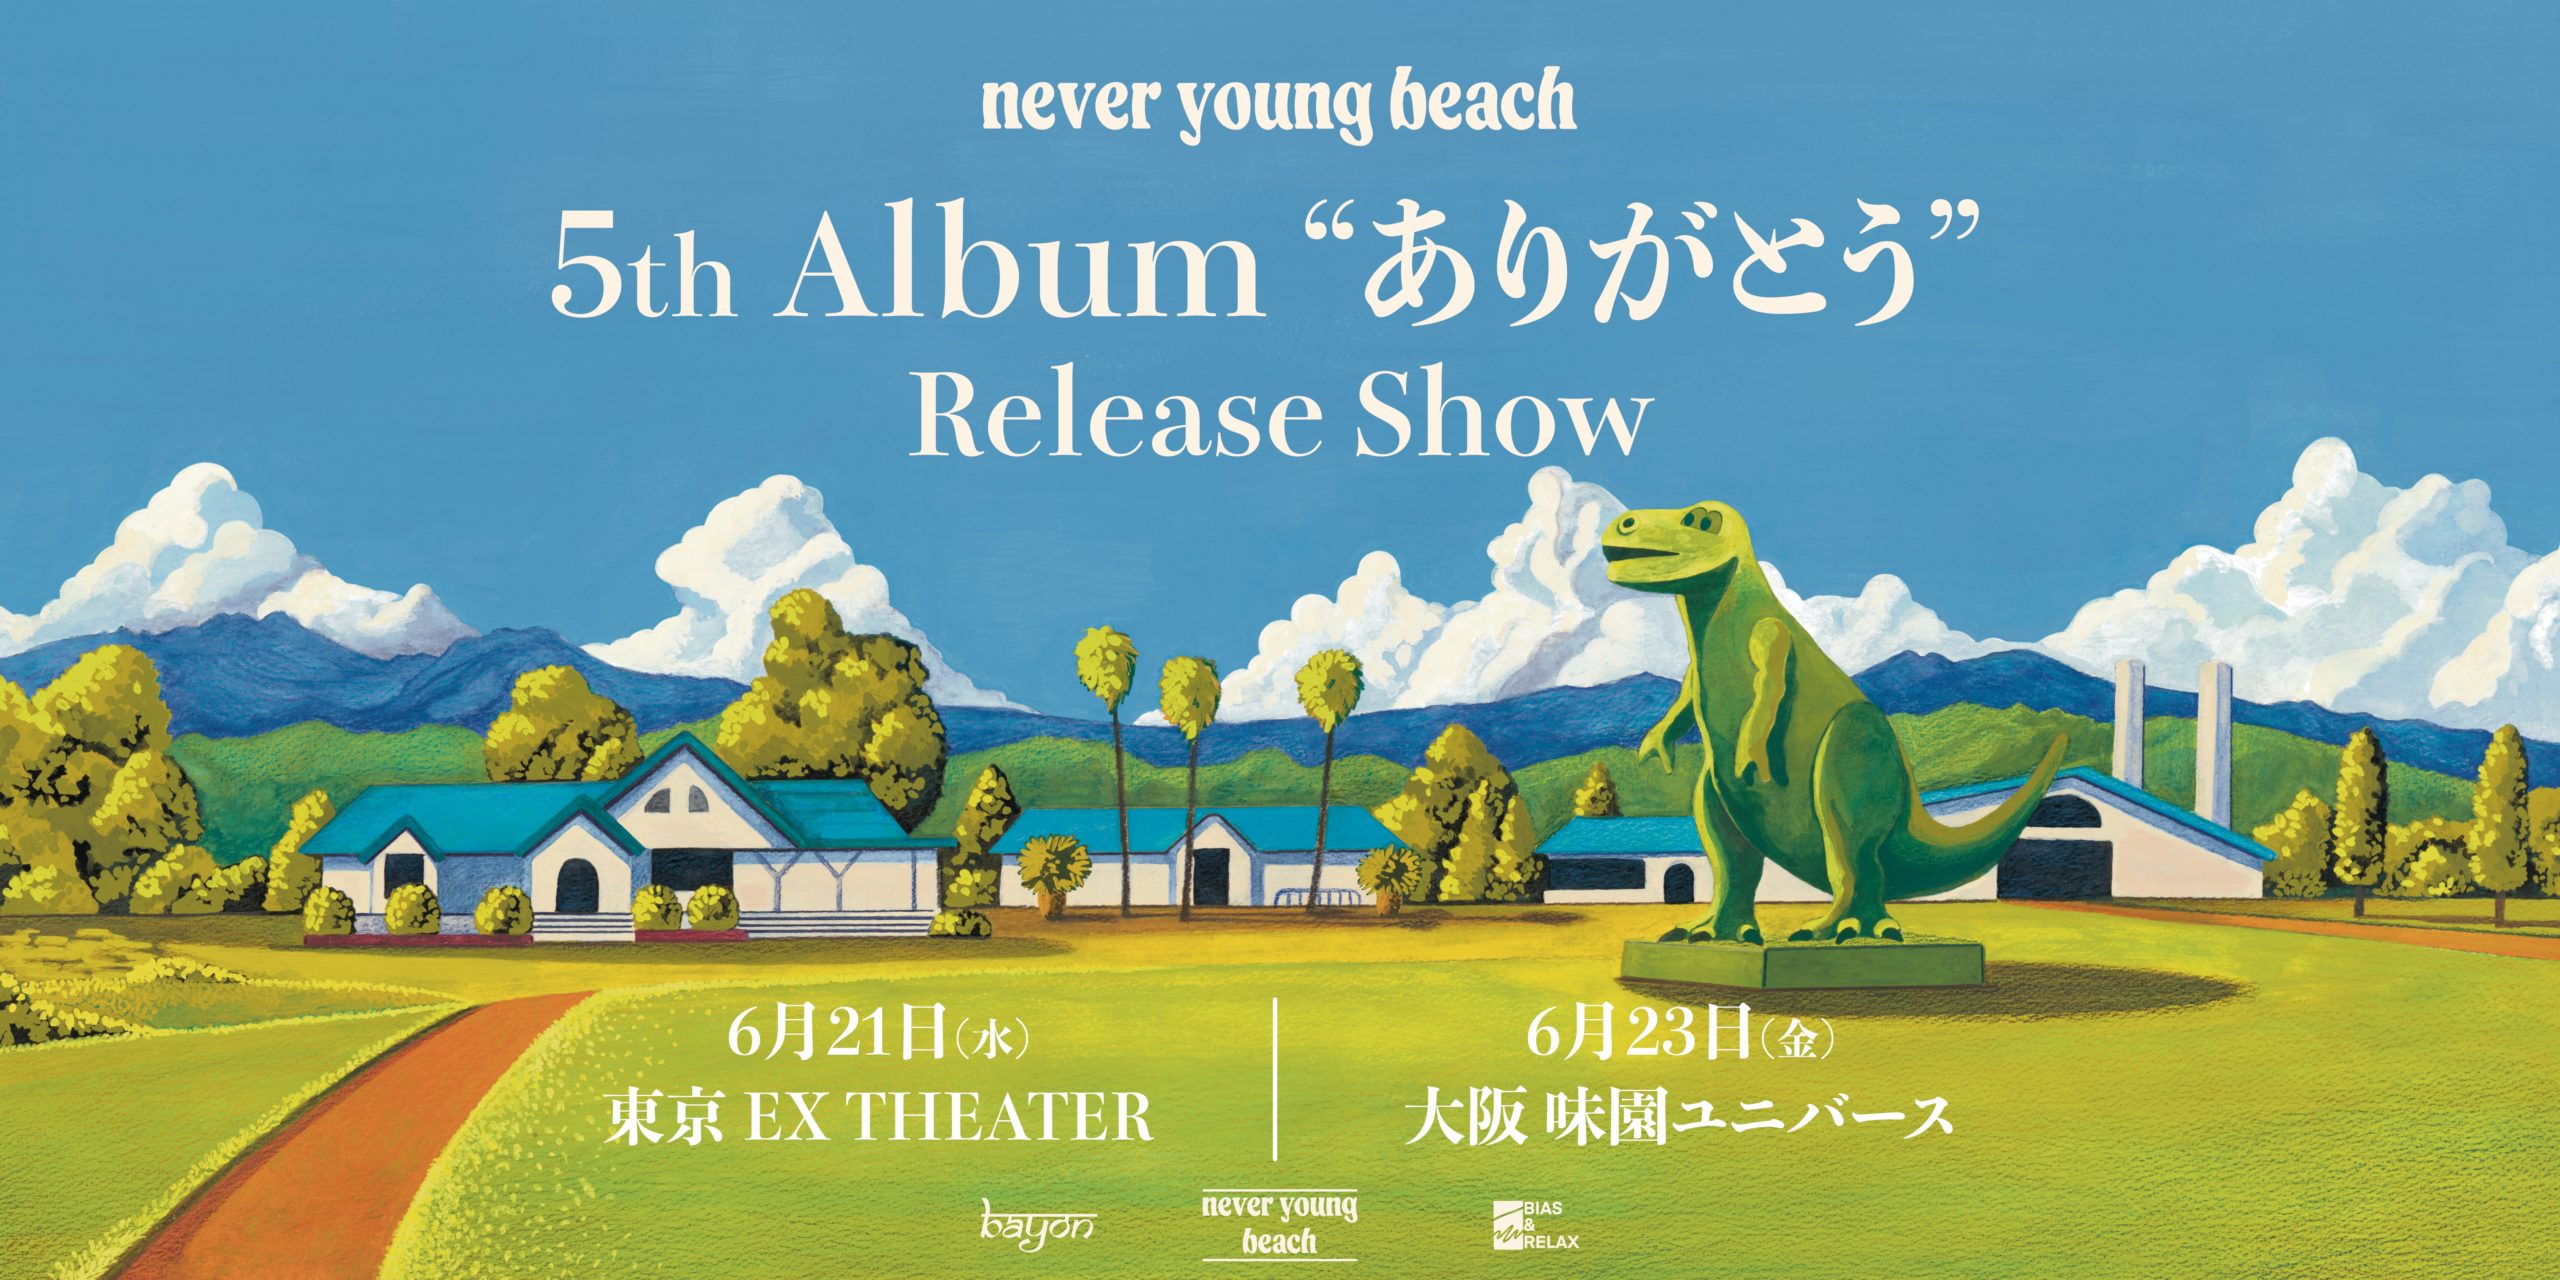 5th Album “ありがとう” Release Show 東京 / 大阪の開催が決定 